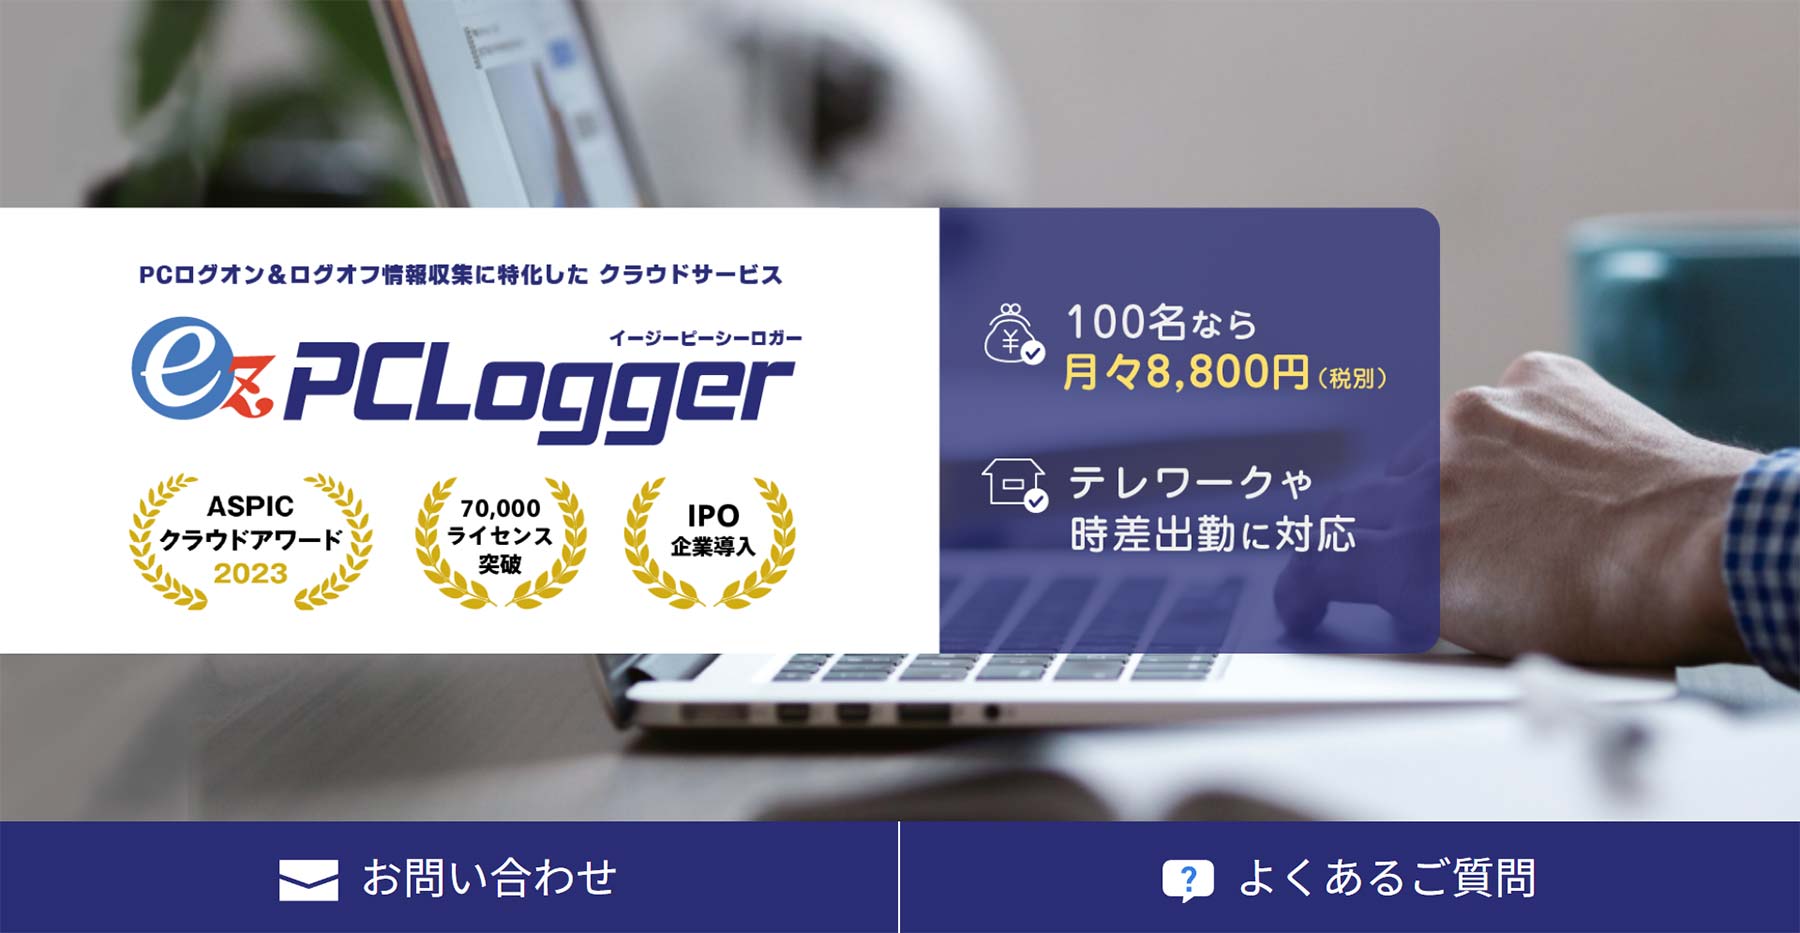 ez-PCLogger公式Webサイト